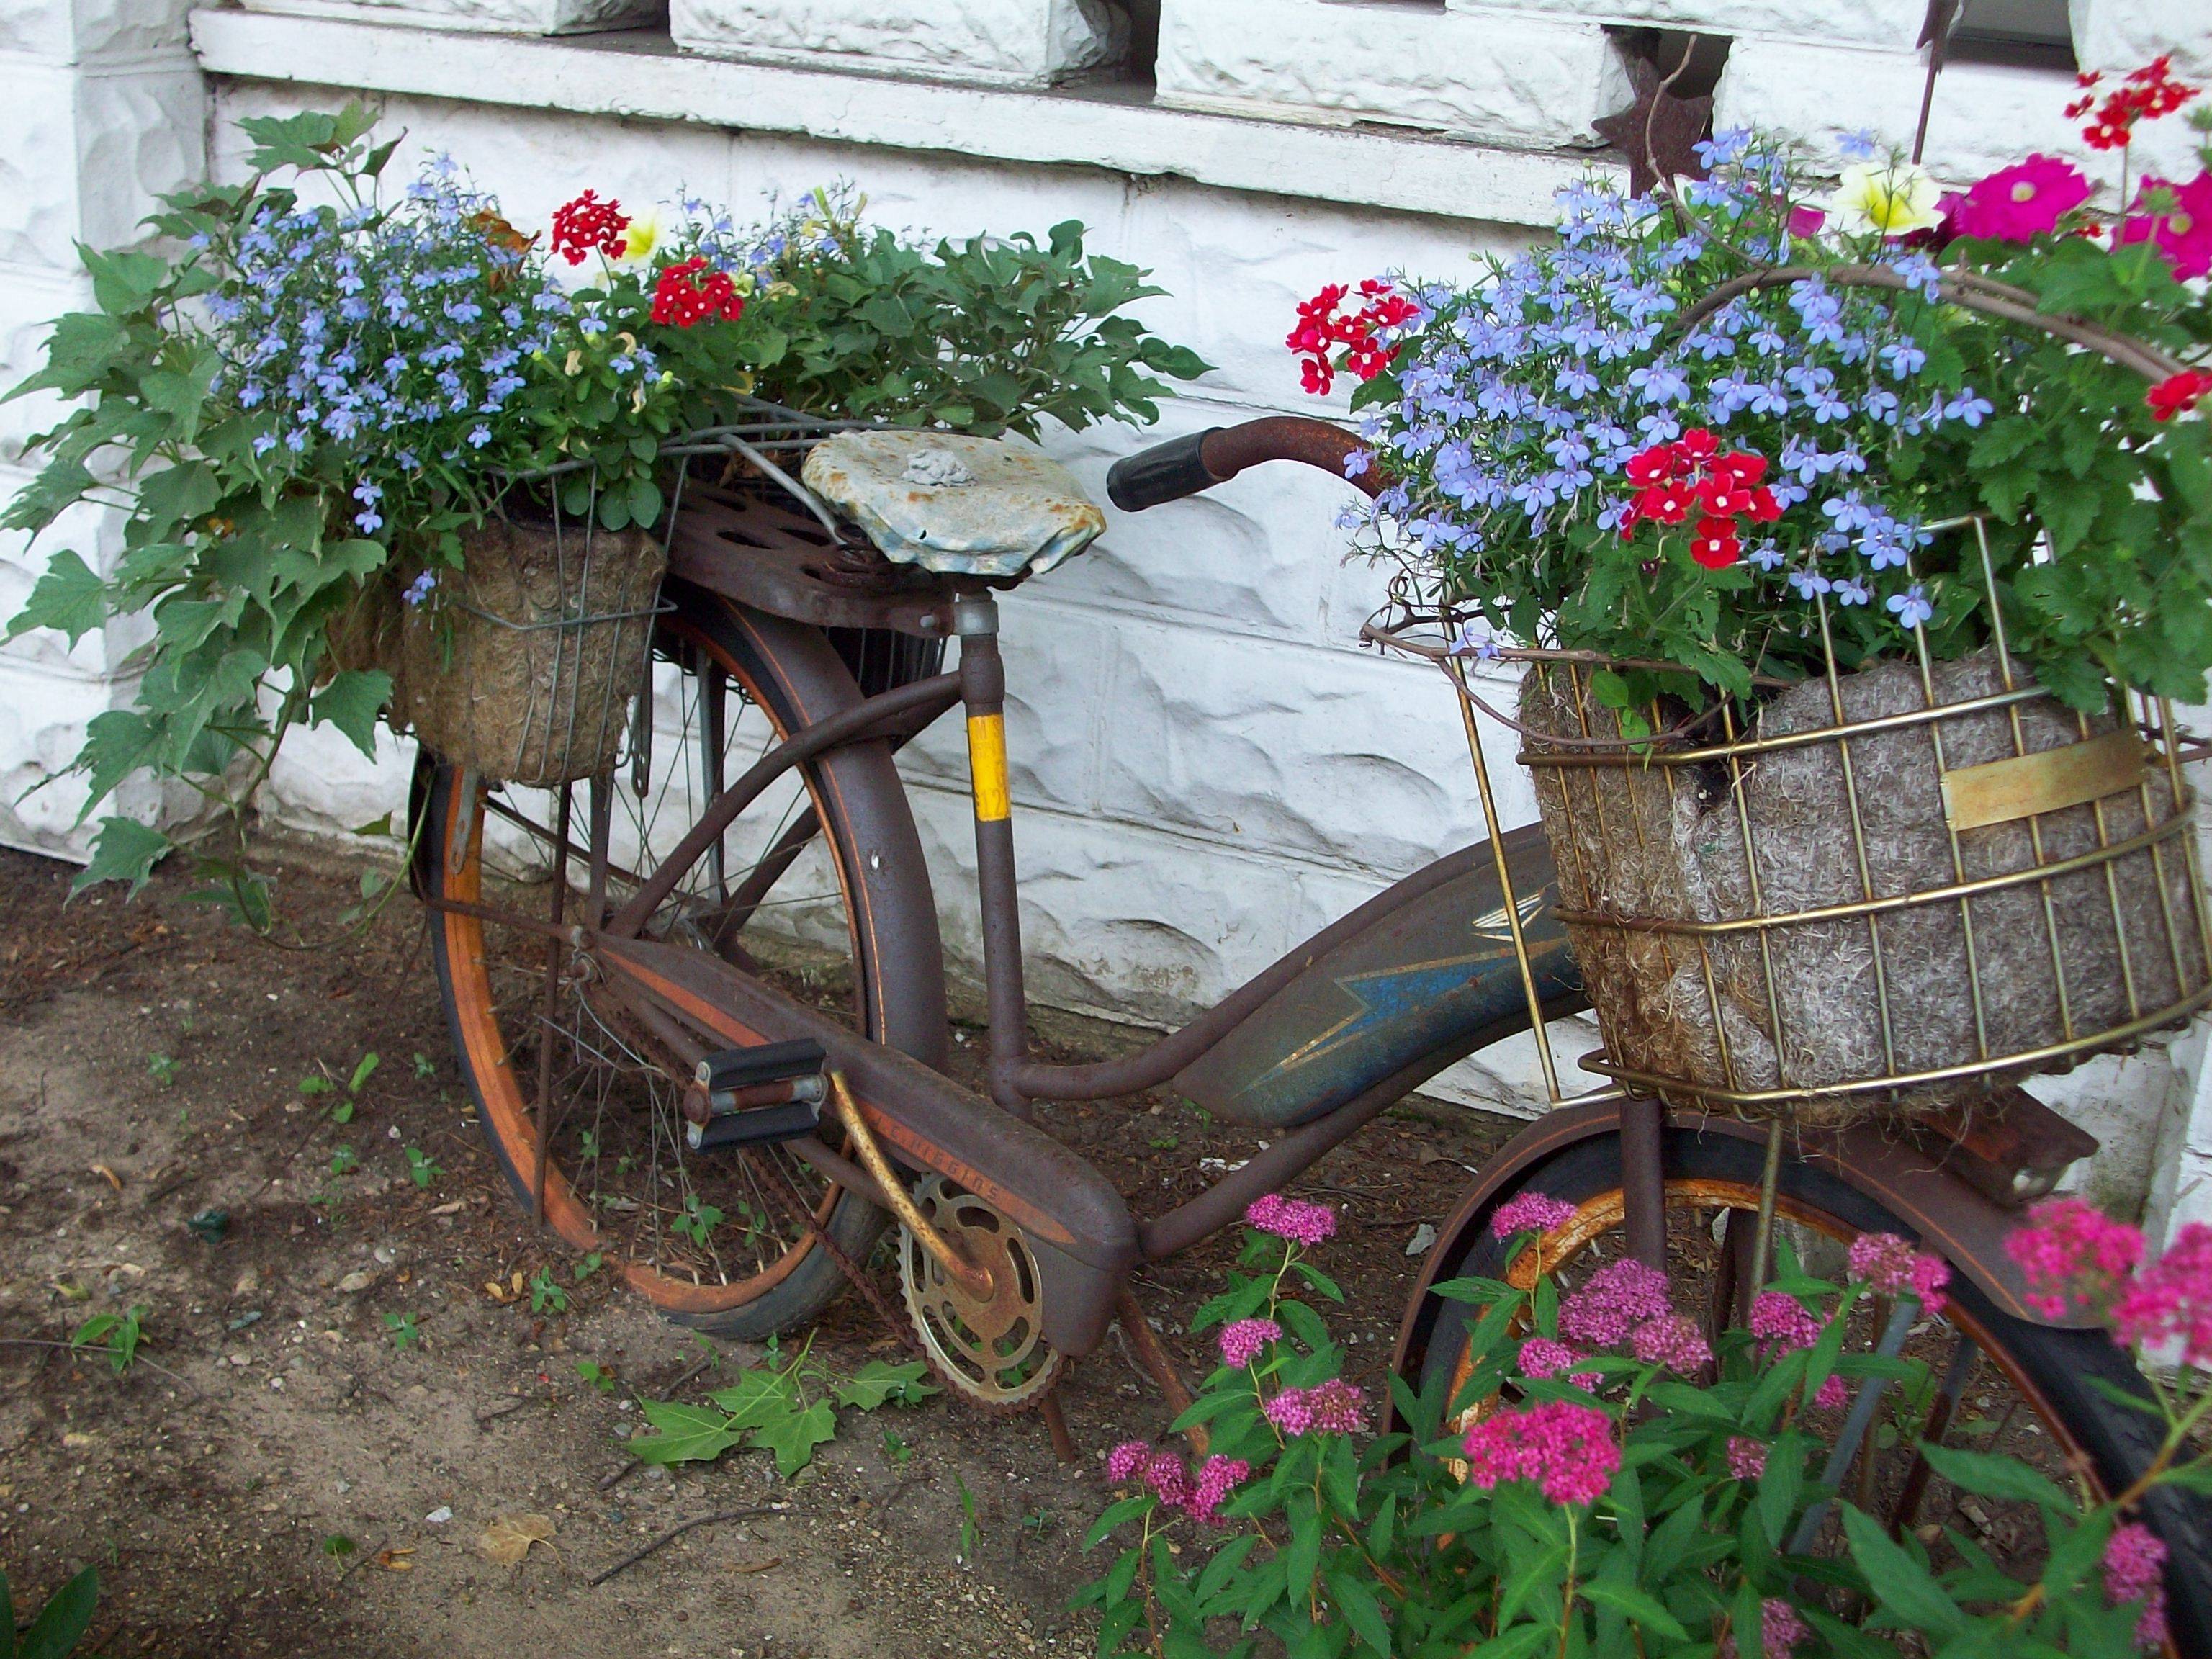 Vintage Bicycle Planter